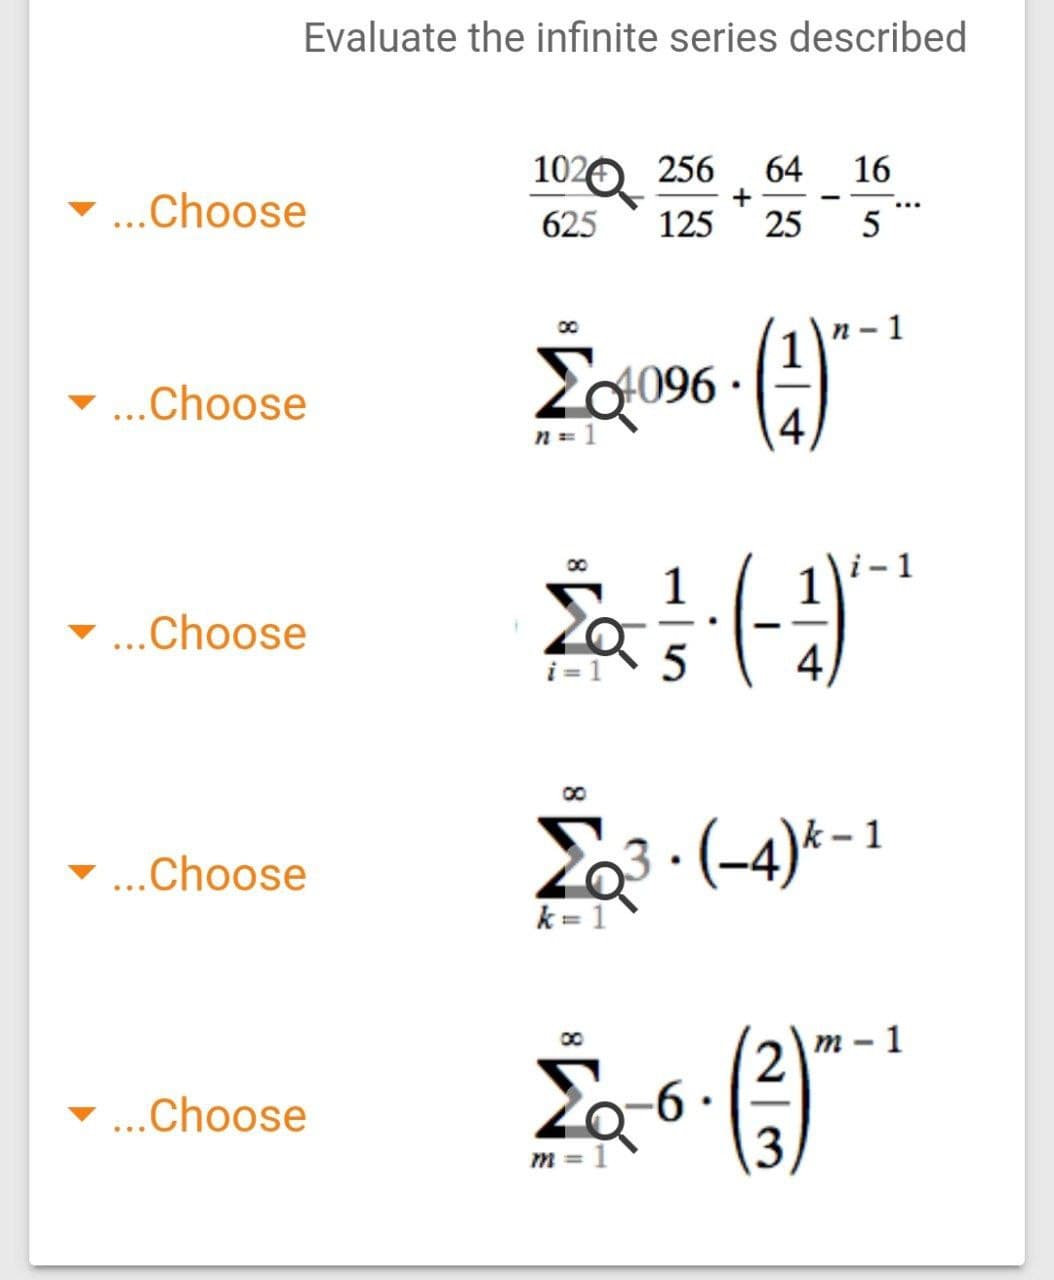 Evaluate the infinite series described
1020 256
+
64
16
...Choose
625
125
25
n- 1
Za096
4
...Choose
i- 1
00
- ...Choose
i = 1
4,
Ž3 : (-4)*- 1
3 ·
-...Choose
k = 1
т- 1
...Choose
3,
m = 1
